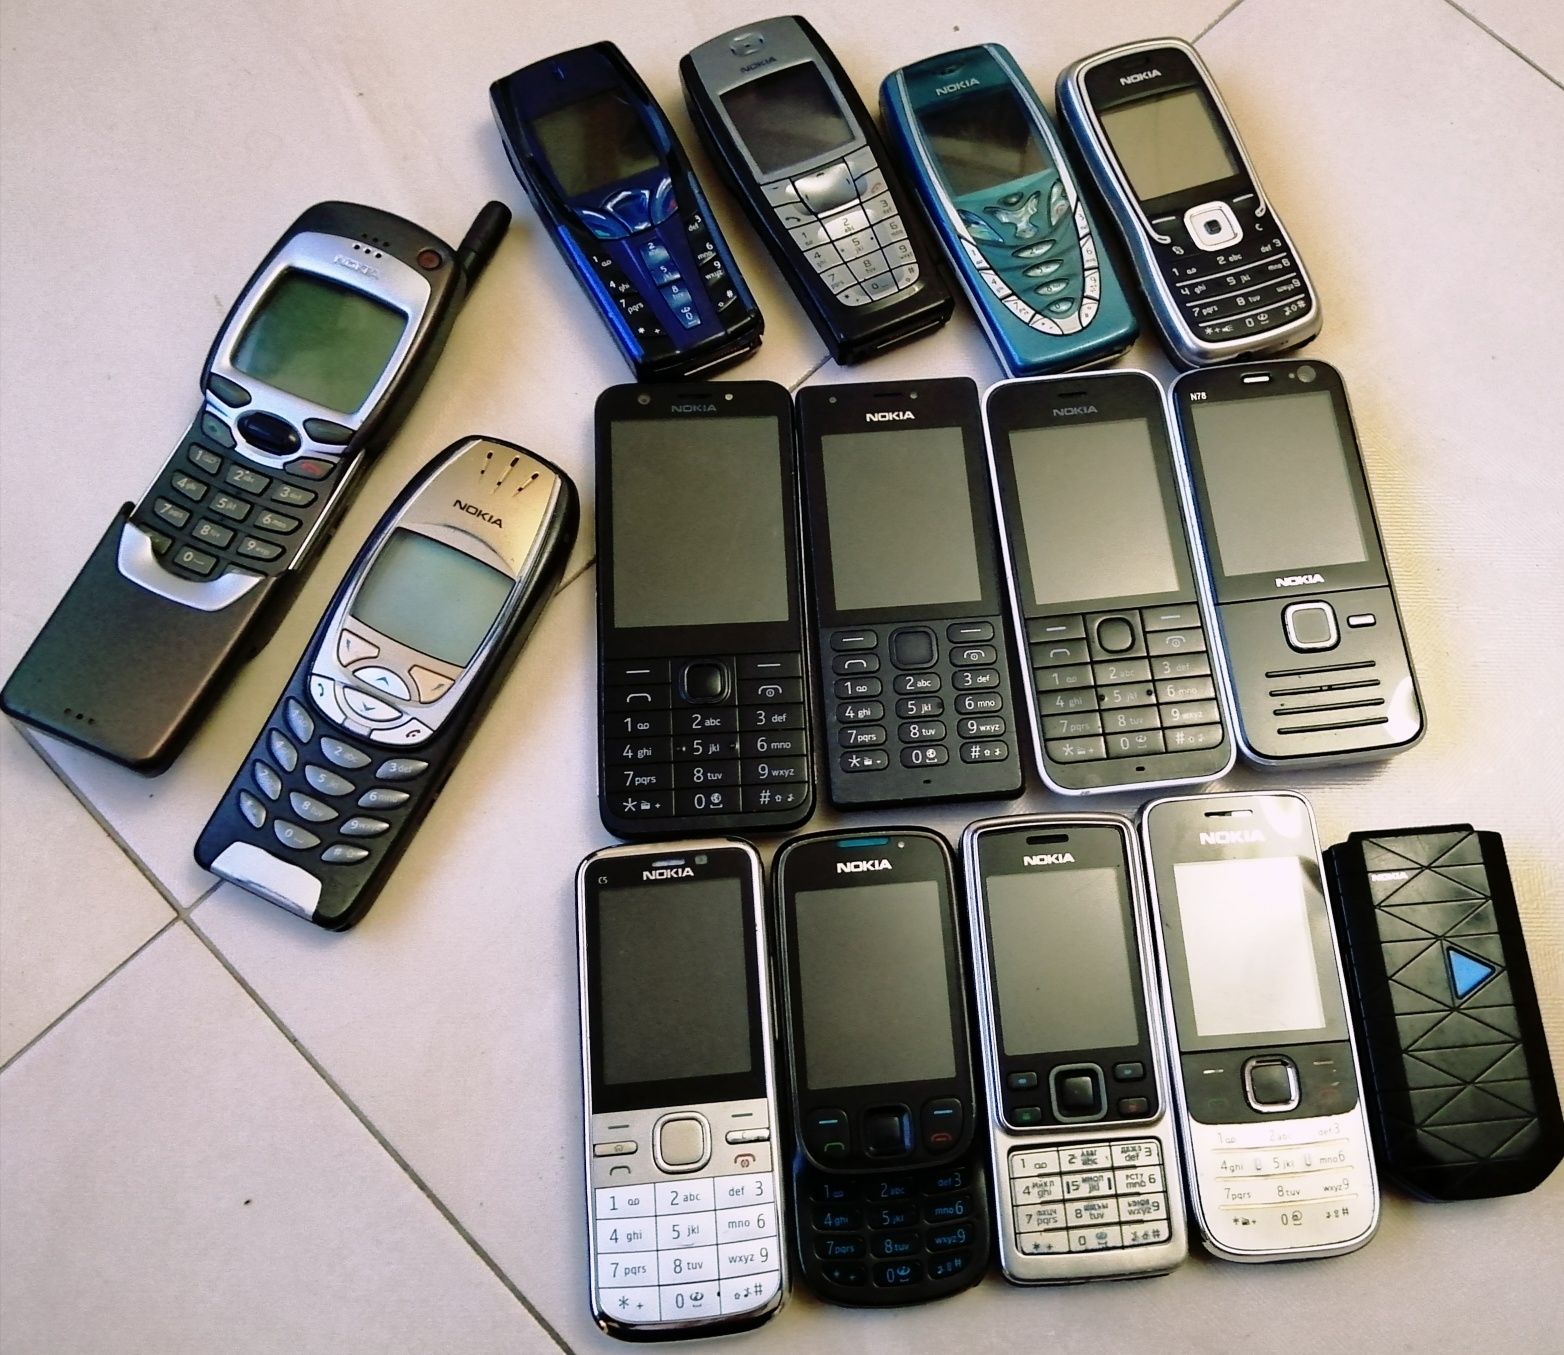 Nokia 7110,6310i,7210,7250,6220,5500d,230,220,216,N78,C5,6303,7070,